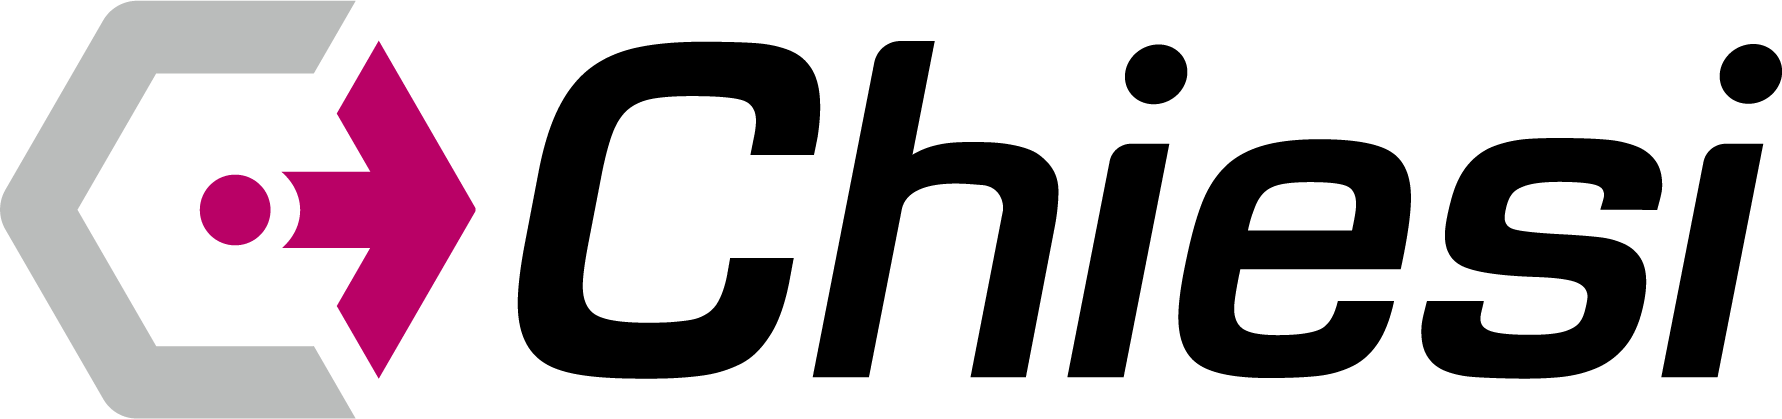 Chiesi Logo Primary RGB